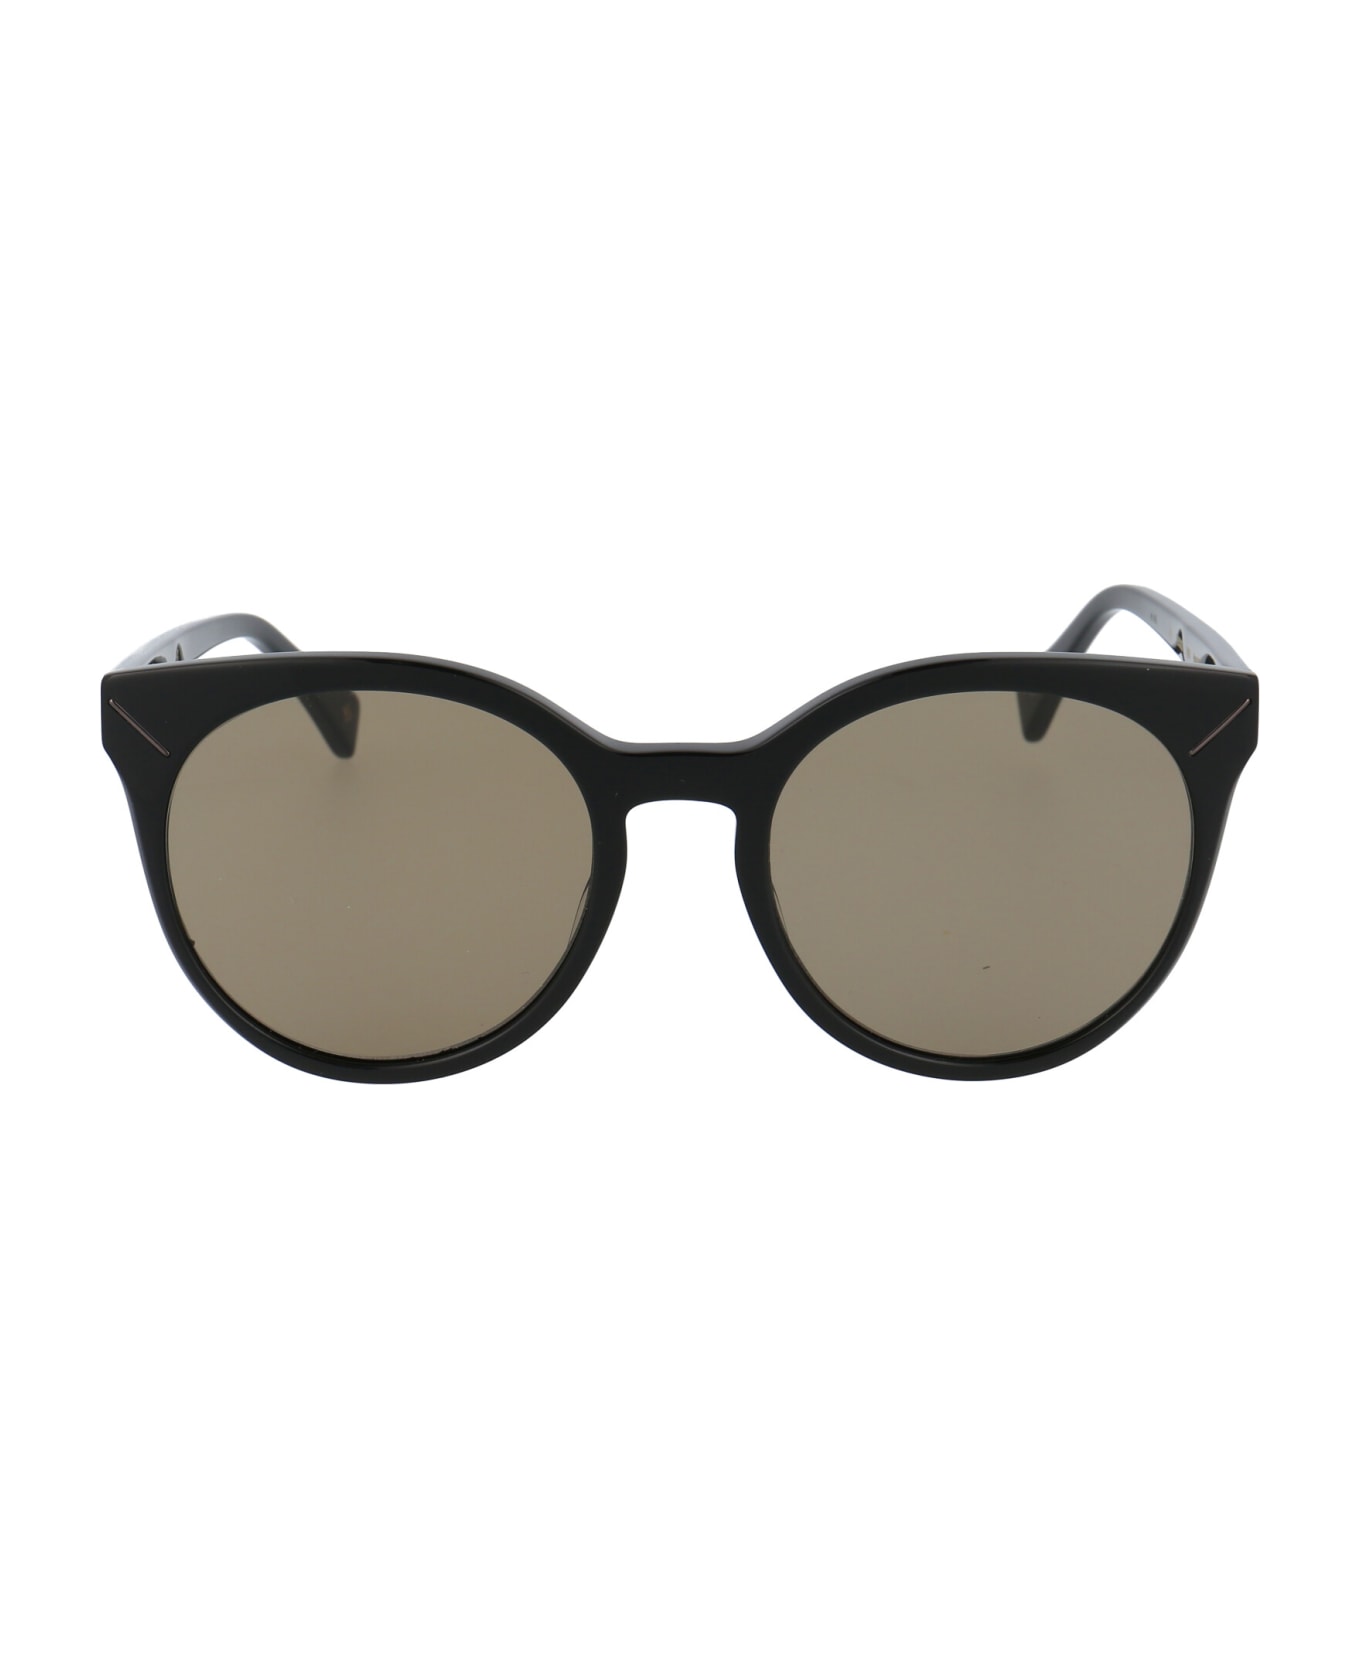 Yohji Yamamoto Ys5003 Sunglasses - 001 BLACK